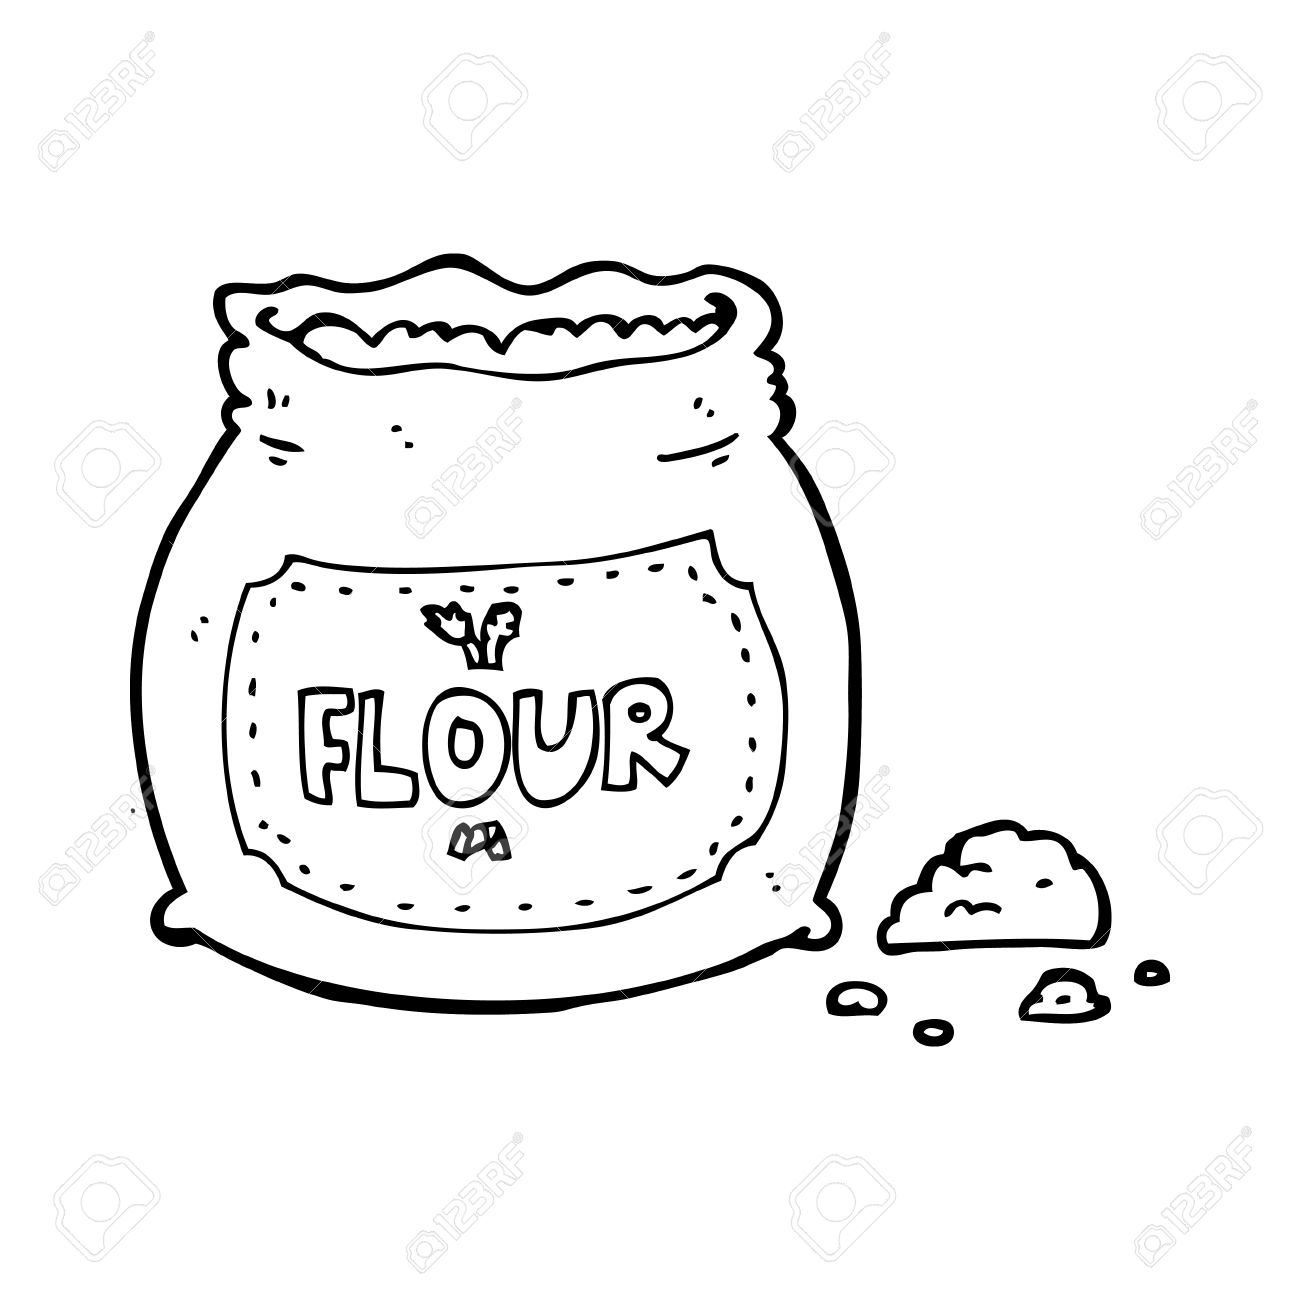 Flour bag vector illustration